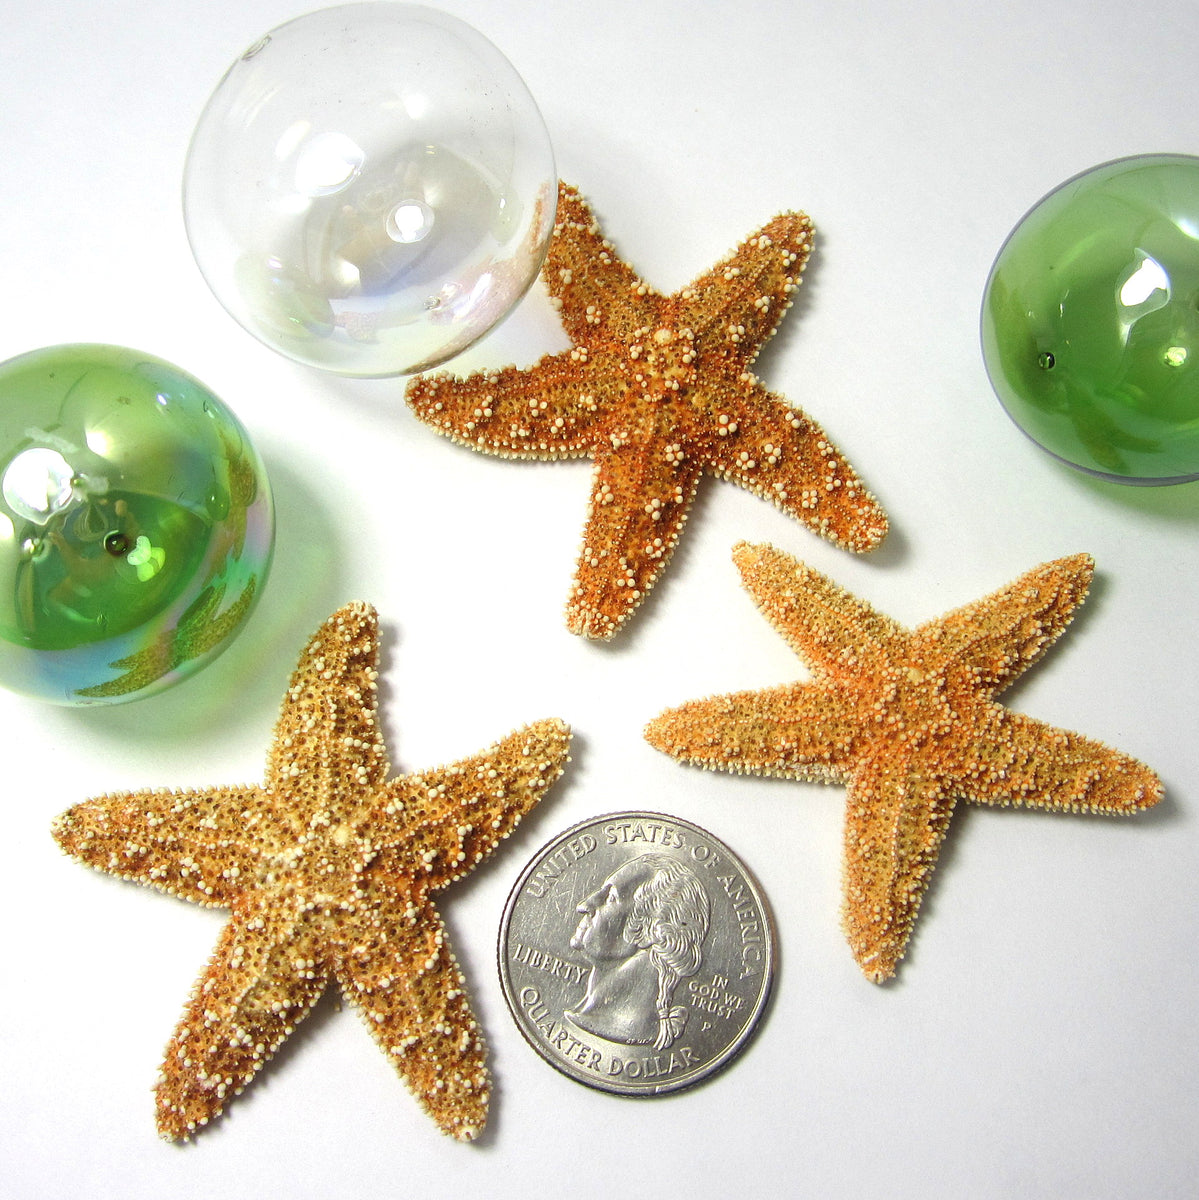 1 Lb Golden Amber Mix Replica Craft Beach / Sea Glass for 